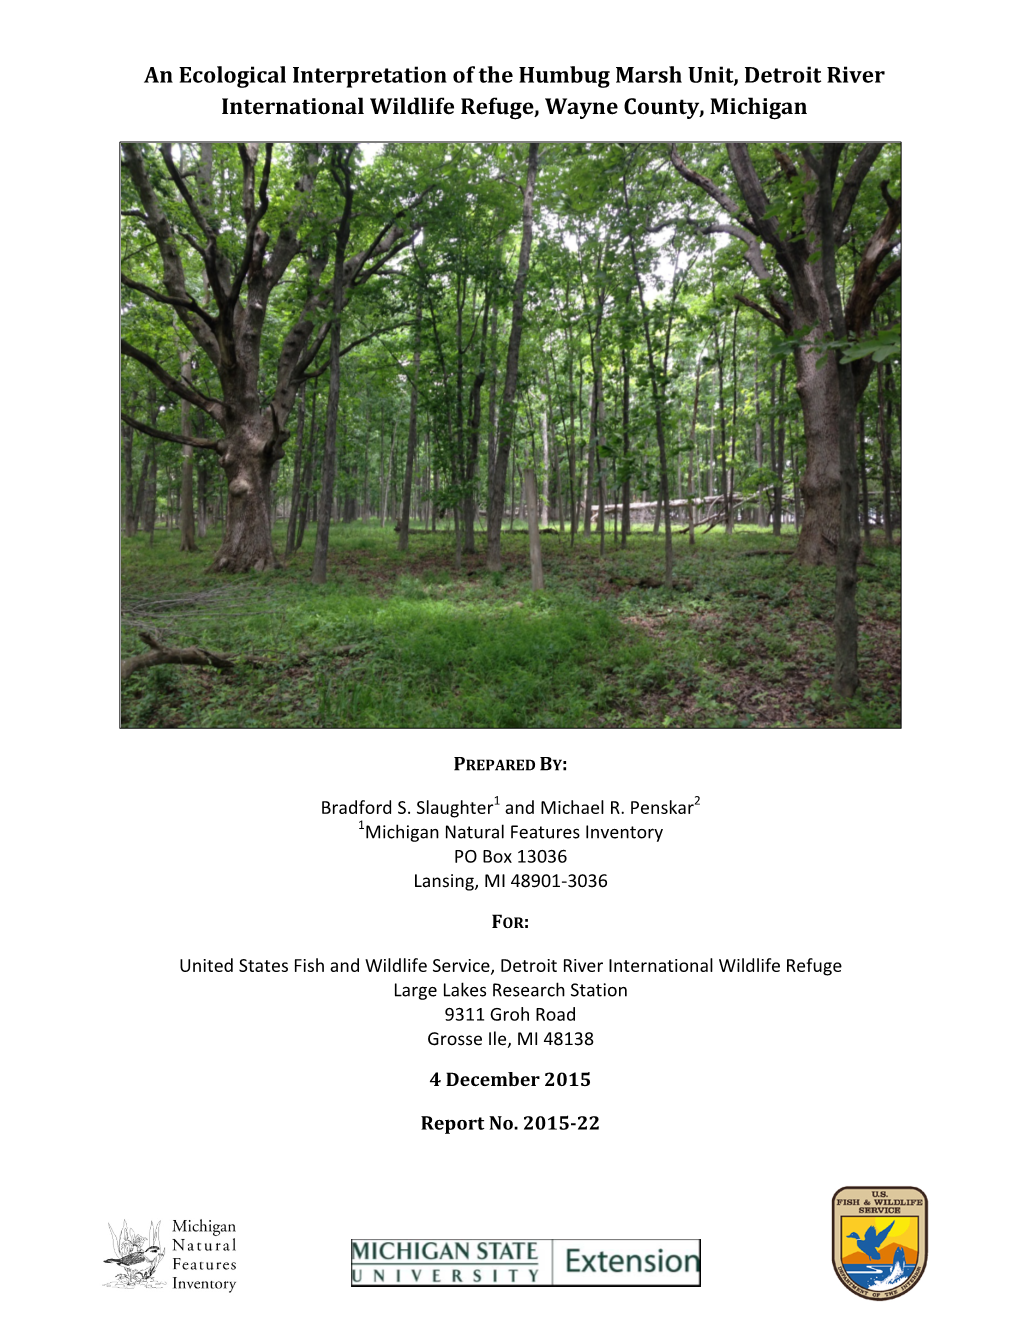 An Ecological Interpretation of the Humbug Marsh Unit, Detroit River International Wildlife Refuge, Wayne County, Michigan